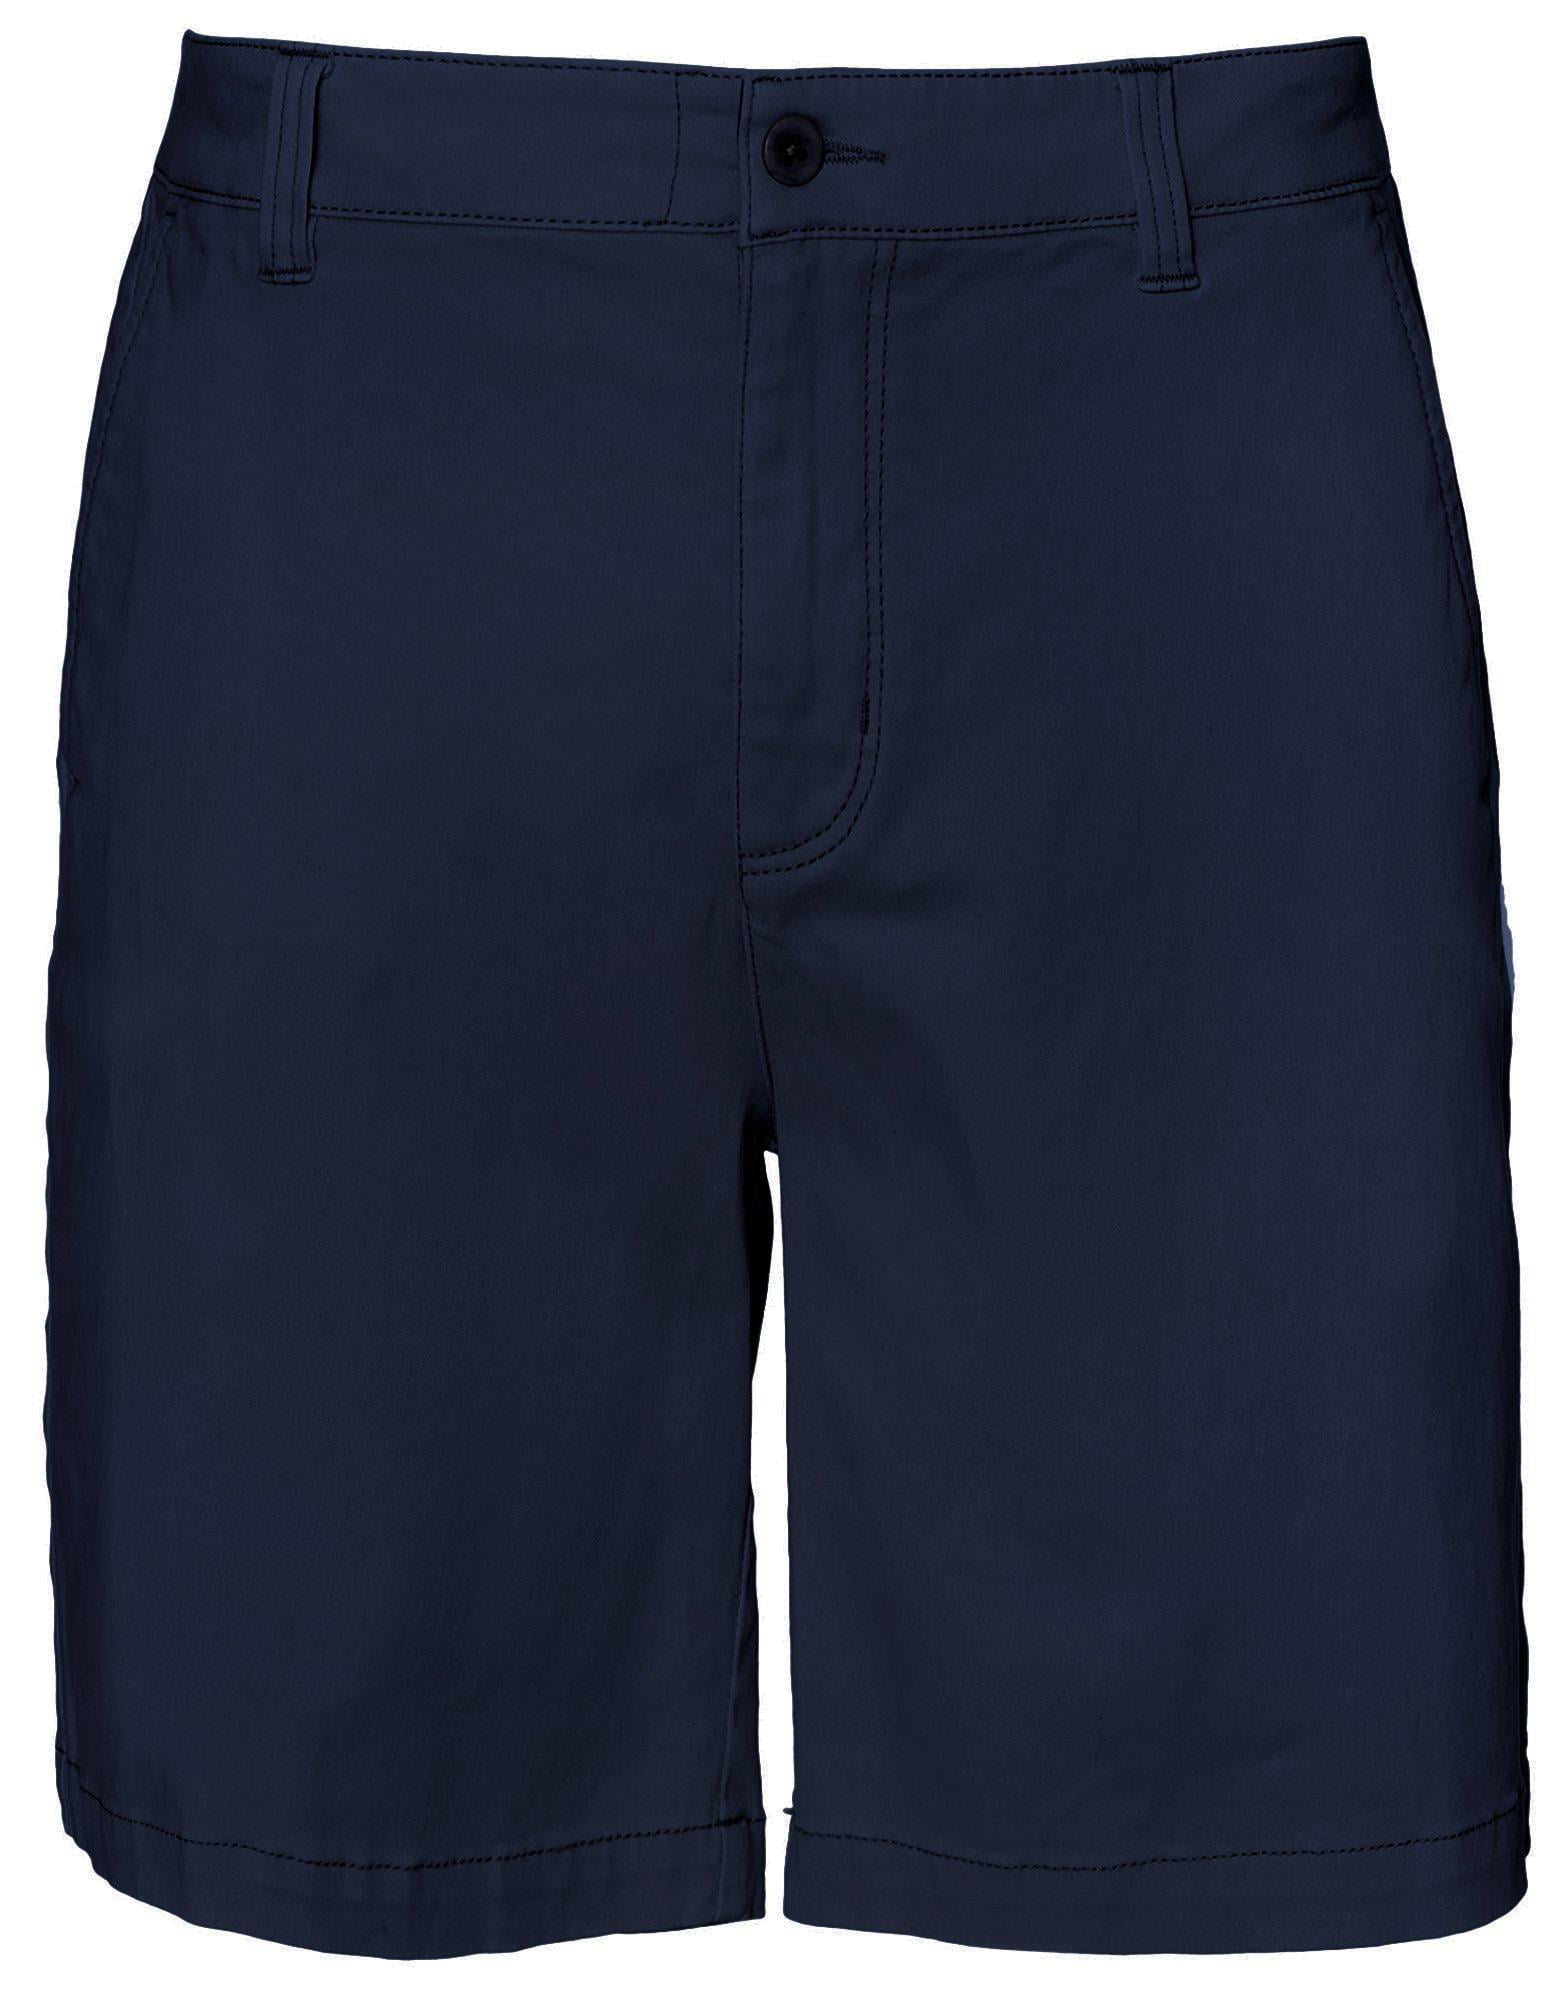 Caribbean Joe Men's Garment Dye Chino Shorts - Walmart.com